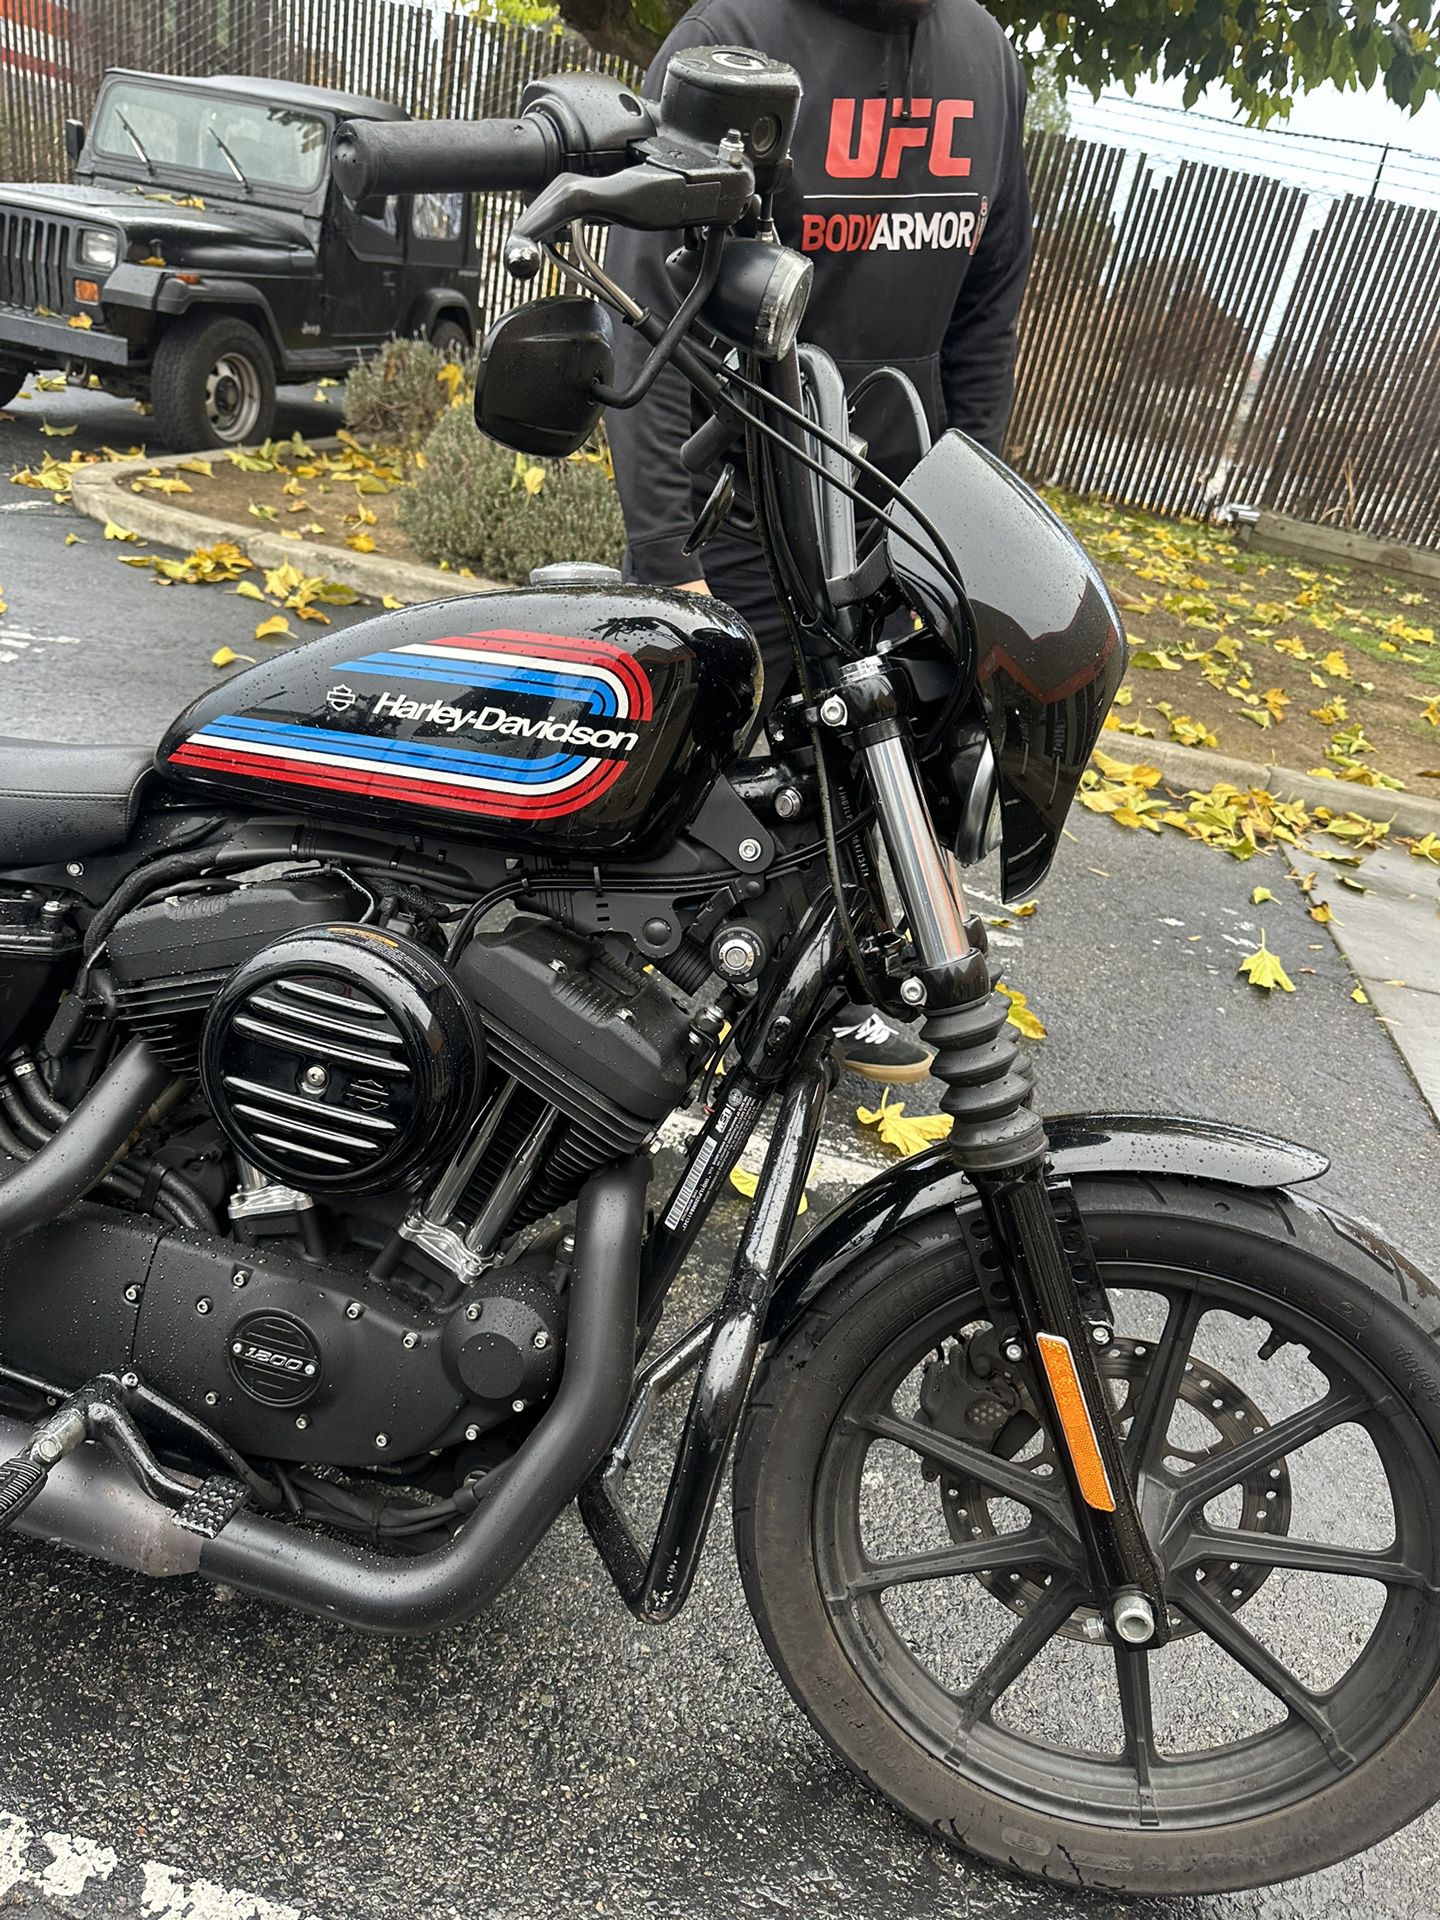 2021 Xl1200 sportster Harley Davidson